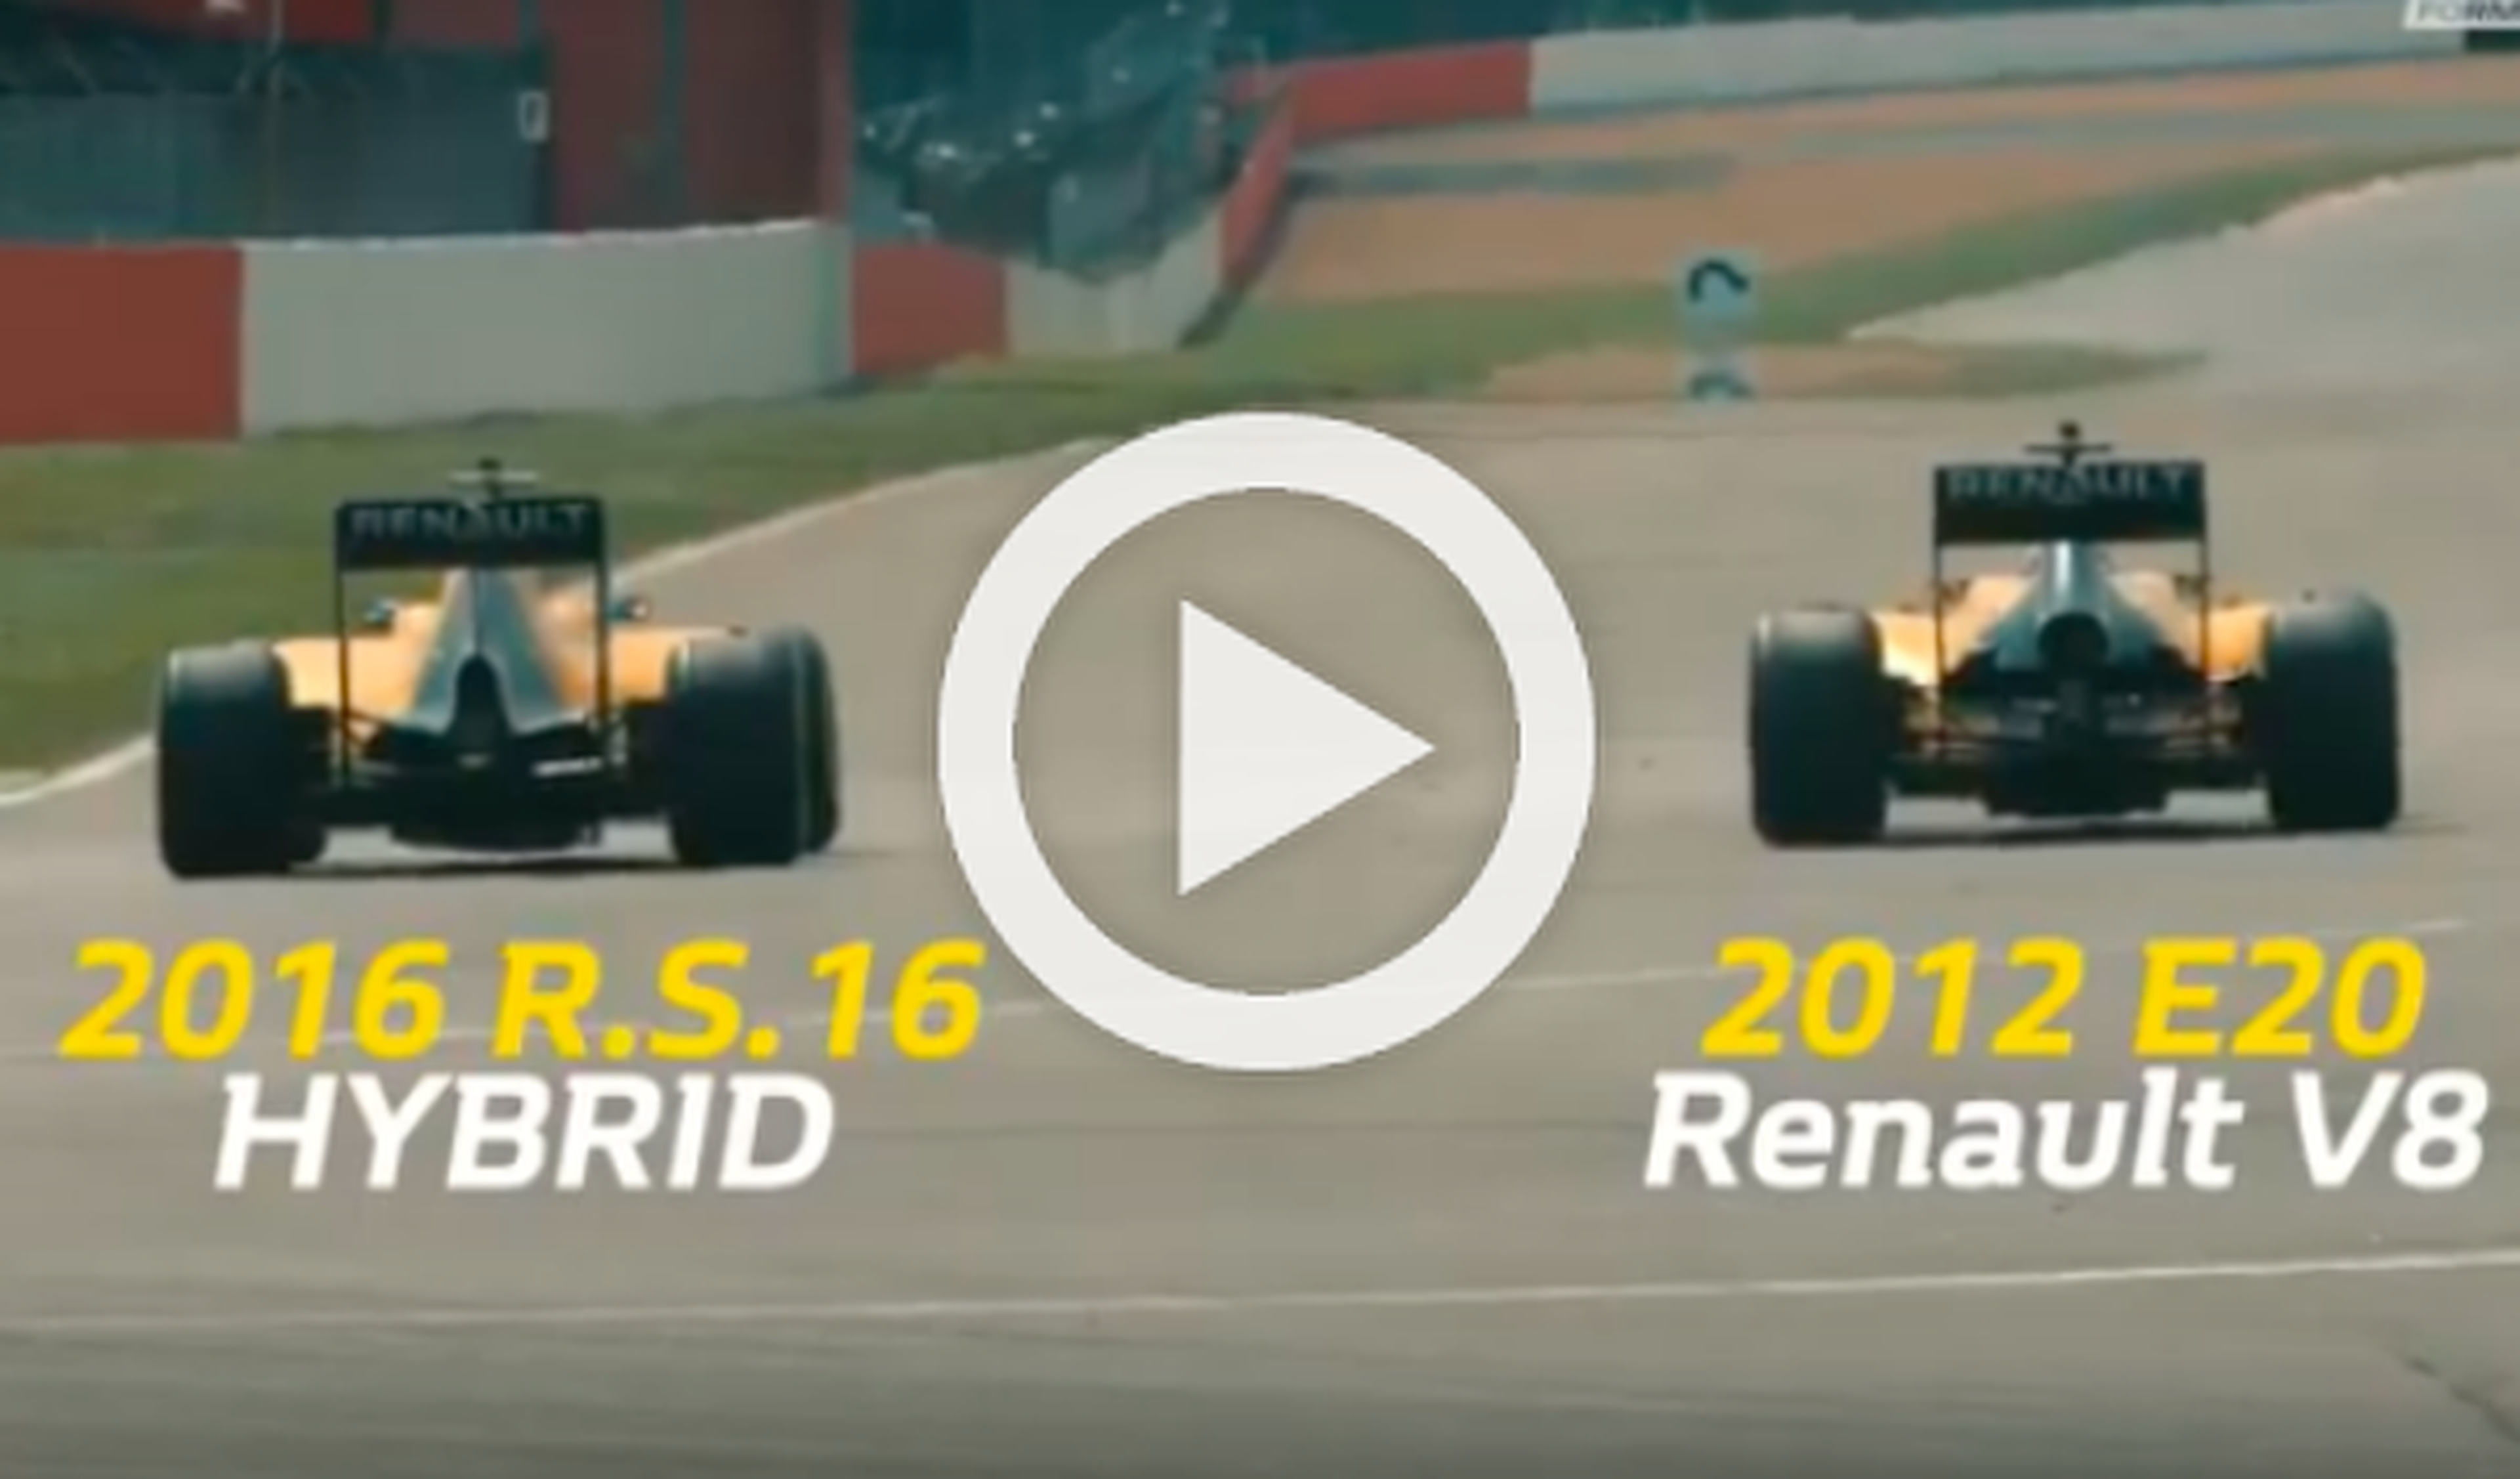 Vídeo: Renault F1 2016 vs Renault F1 2012, ¡espectacular!